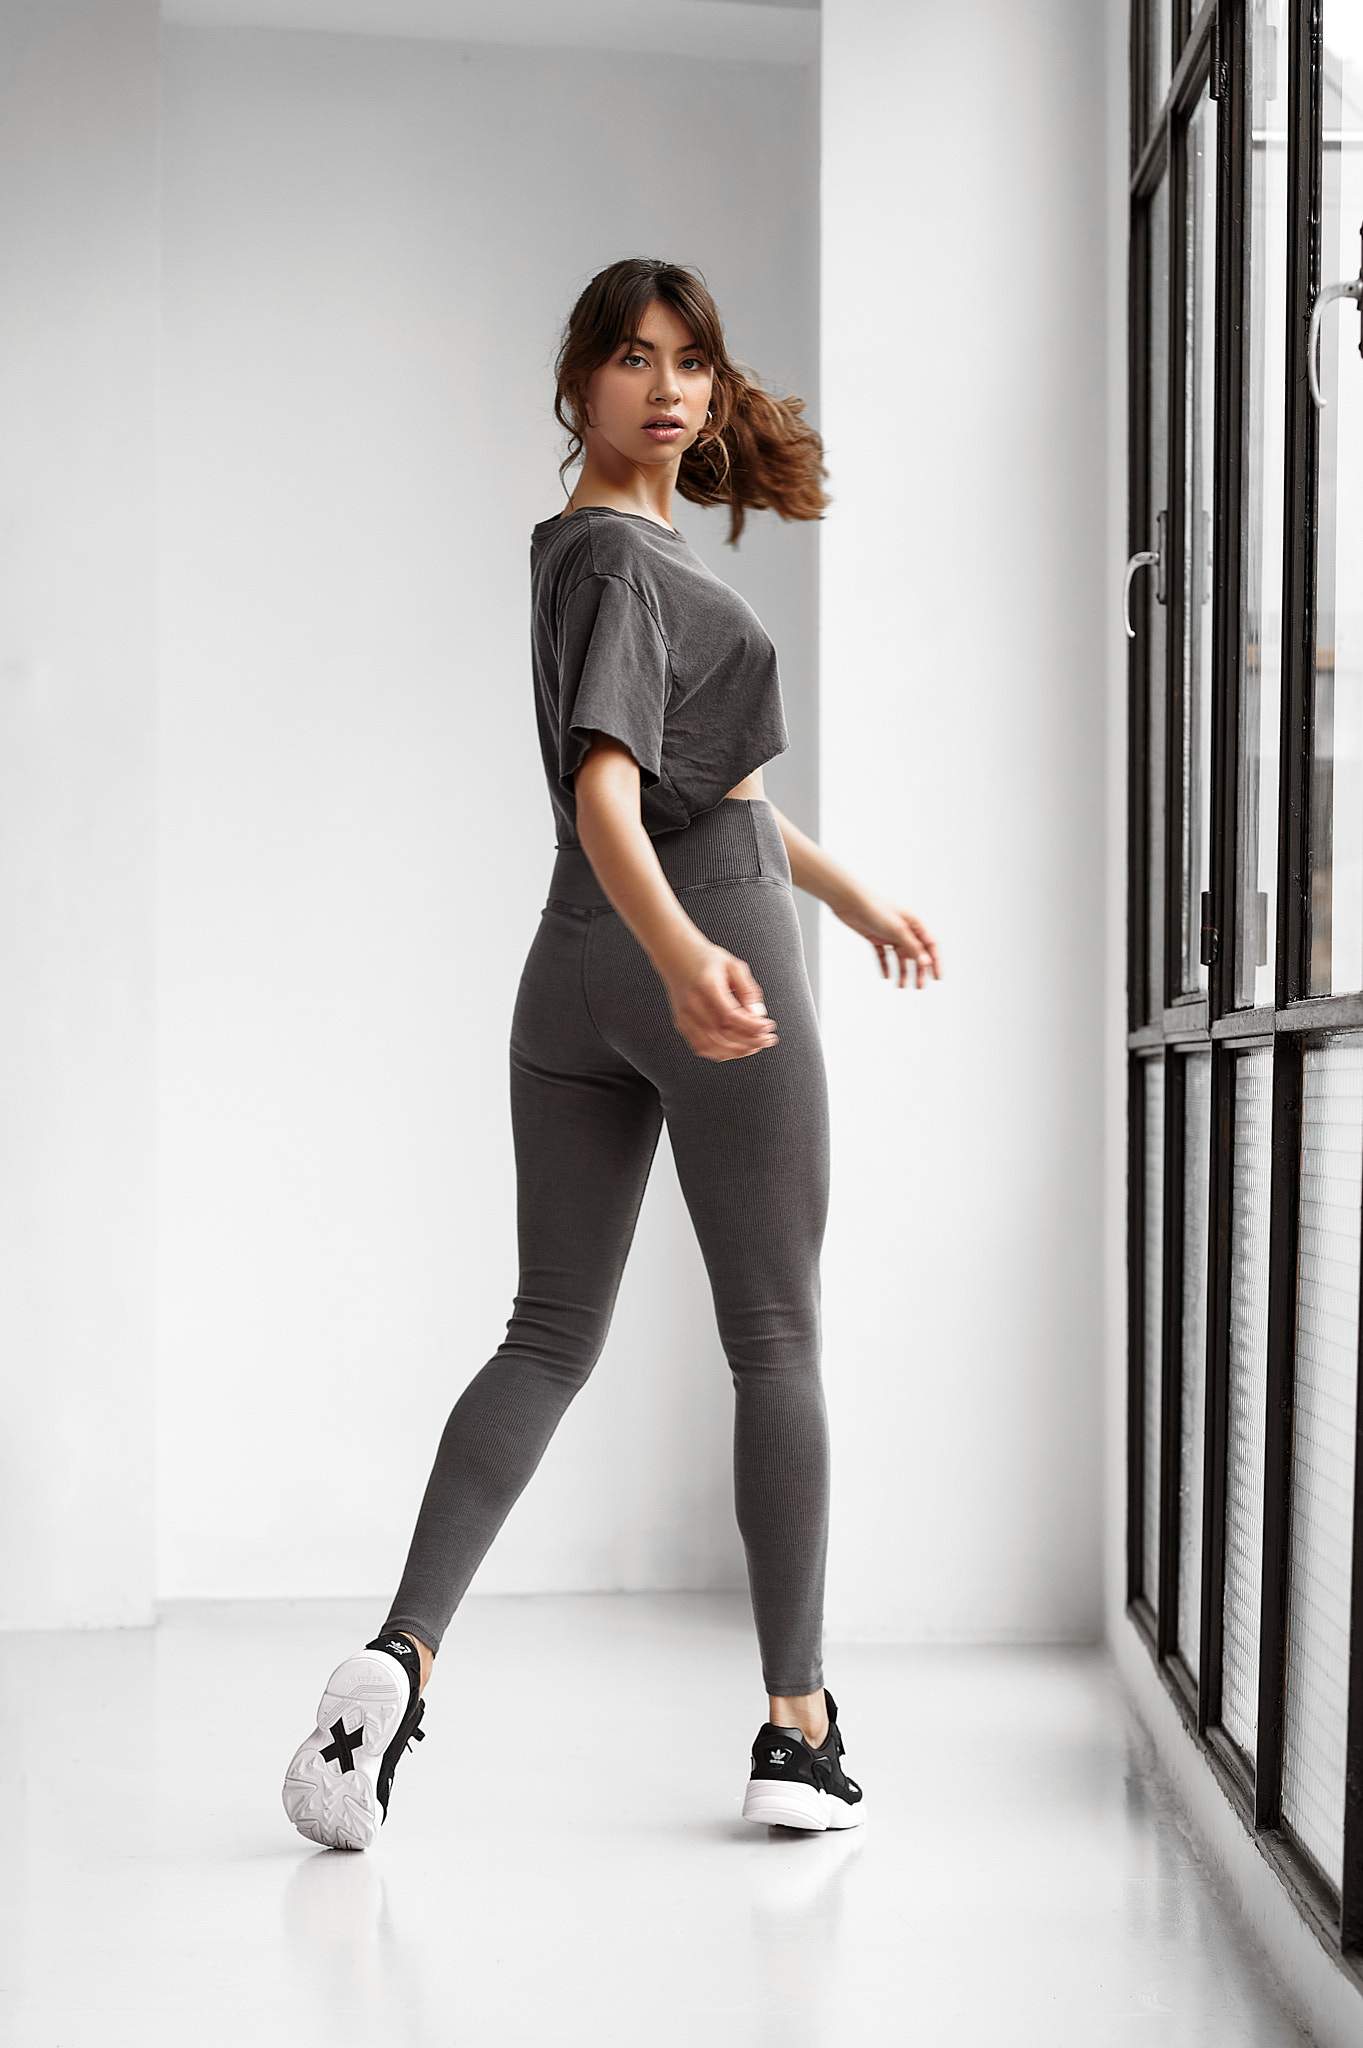 Eunoia Leggings - Charcoal Gray  -  Tight Fit -  Ribbed Fabric -95% Organic Premium Cotton + 5% Elastan - Streetwear - Streetstyle - Minimal Essentials - High Quality Basics - Back Image - Becca & Cole